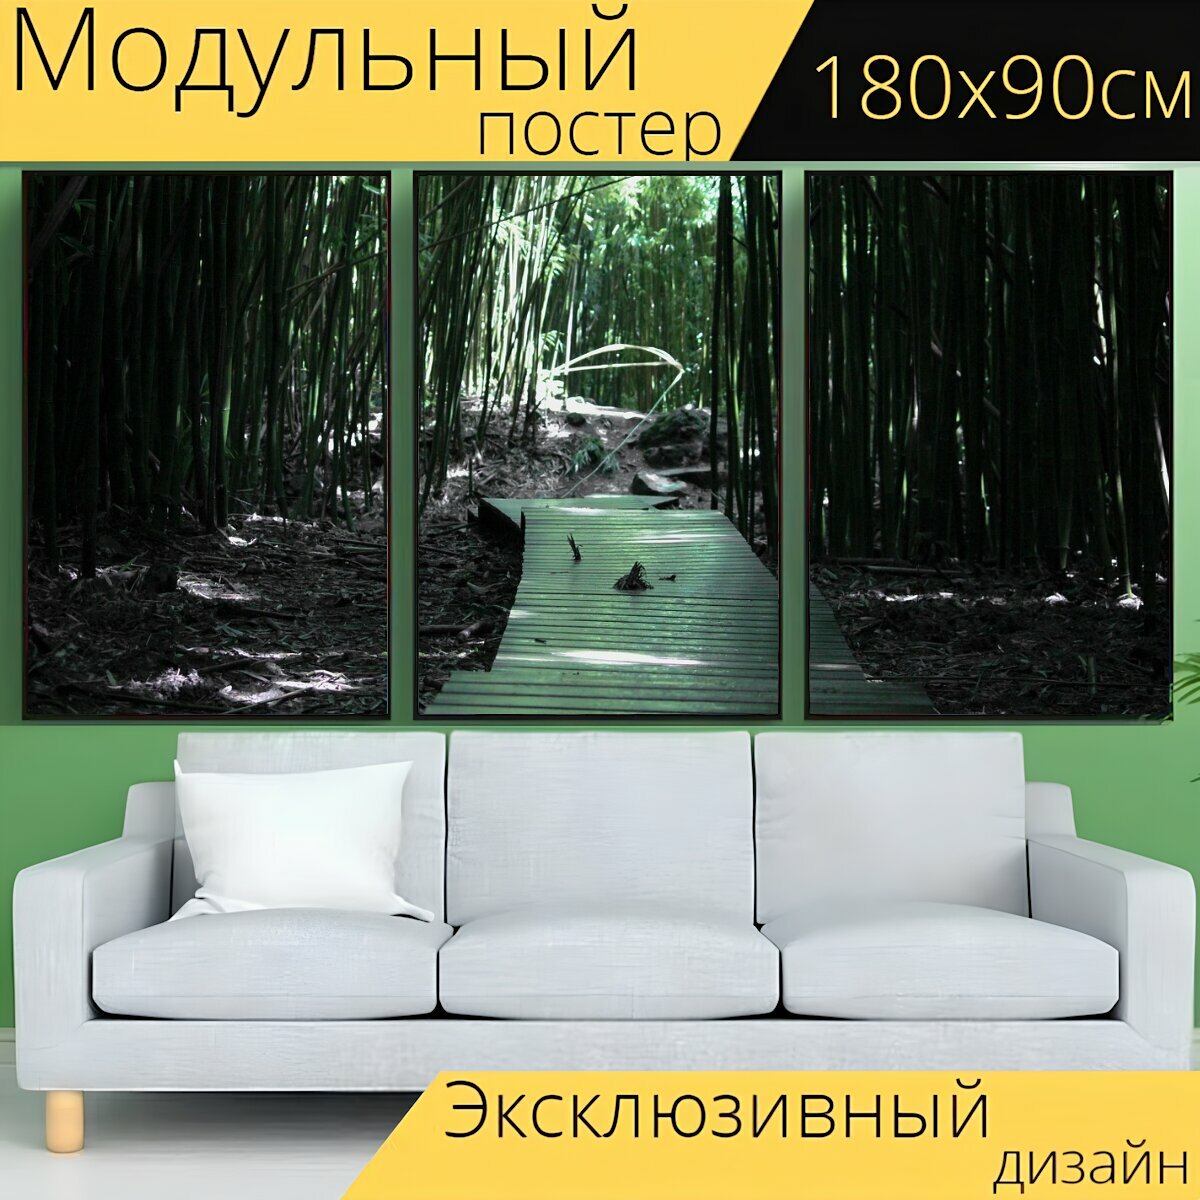 Модульный постер "Бамбук, лес, бамбуковый лес" 180 x 90 см. для интерьера